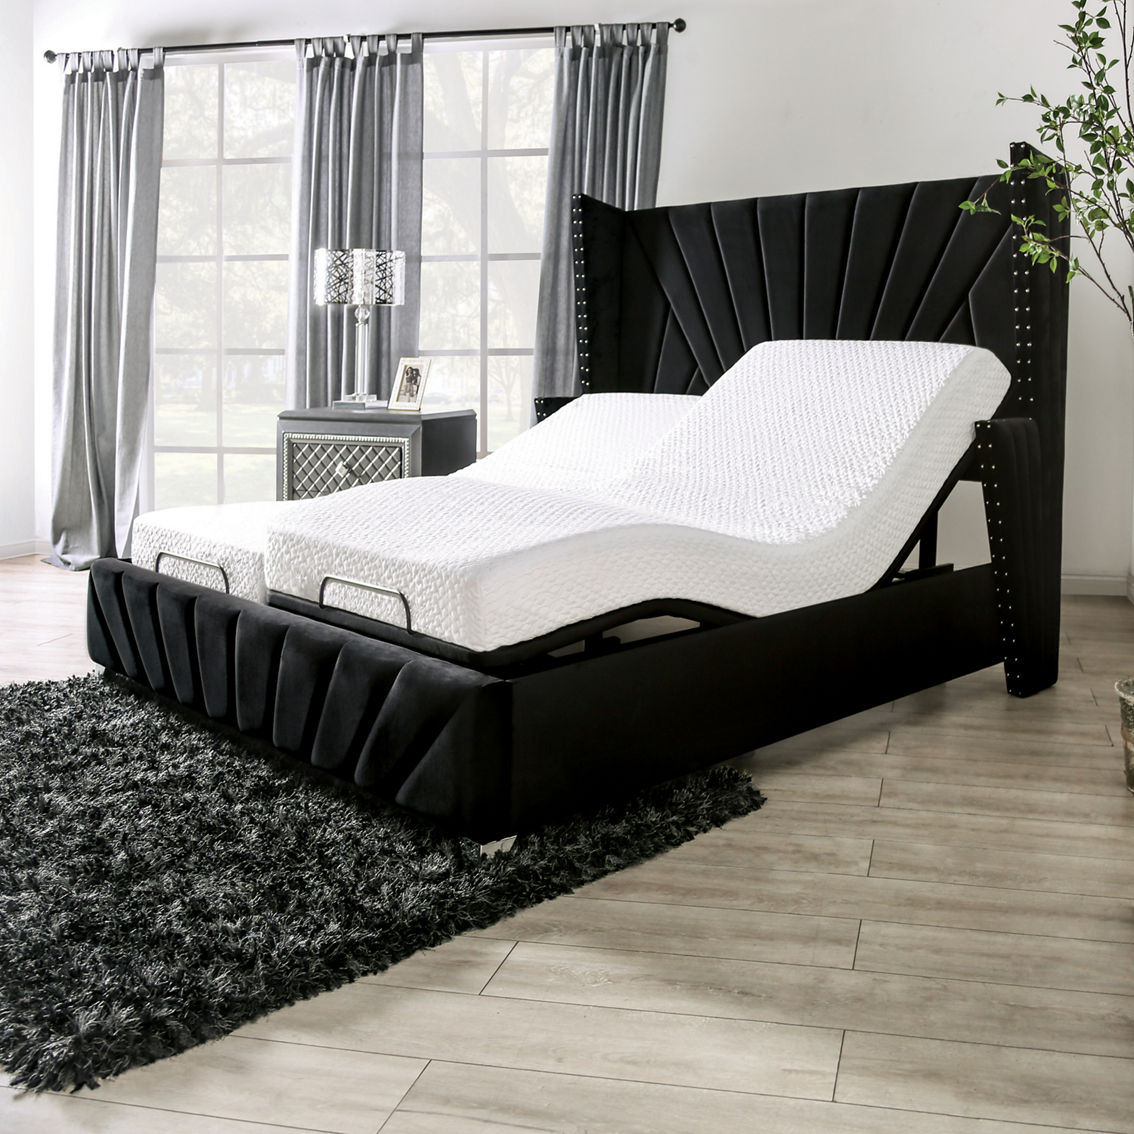 Furniture of America Allemont Adjustable Bed/Mattress frame with Remote - Image 3 of 3